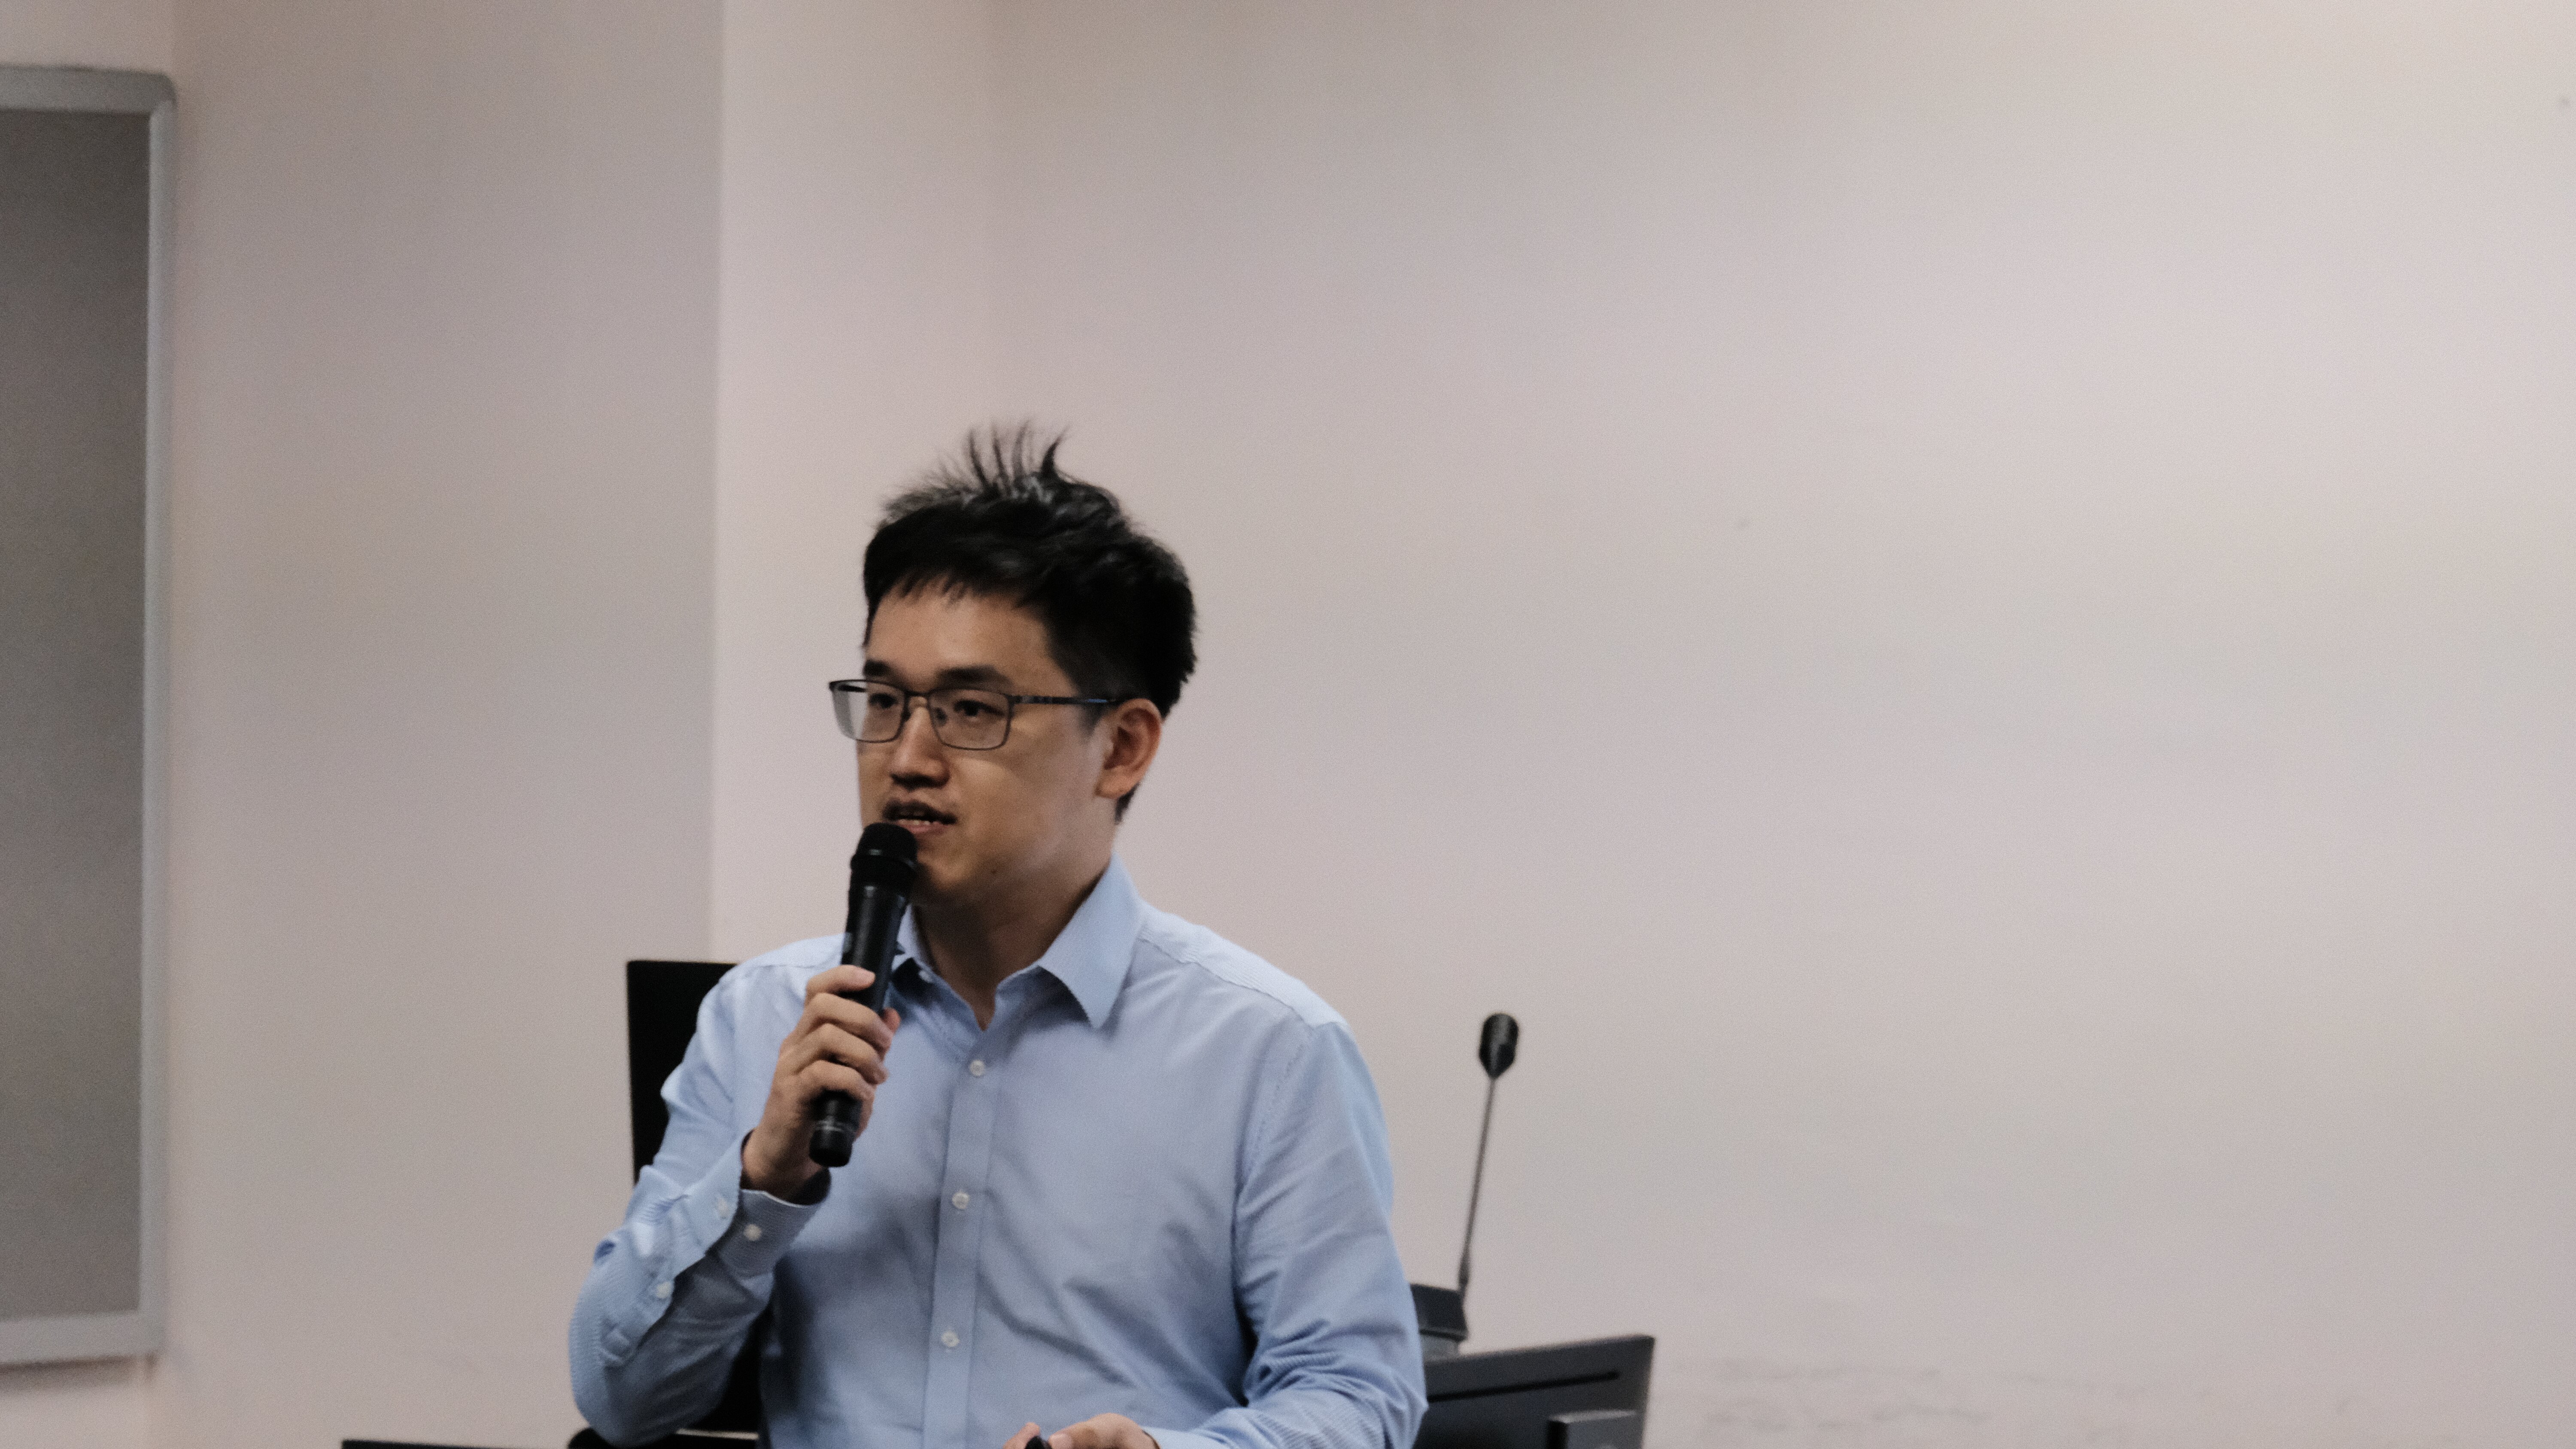 Dr Zhang Jian, Assistant Professor at Department of Finance, The University of Hong Kong